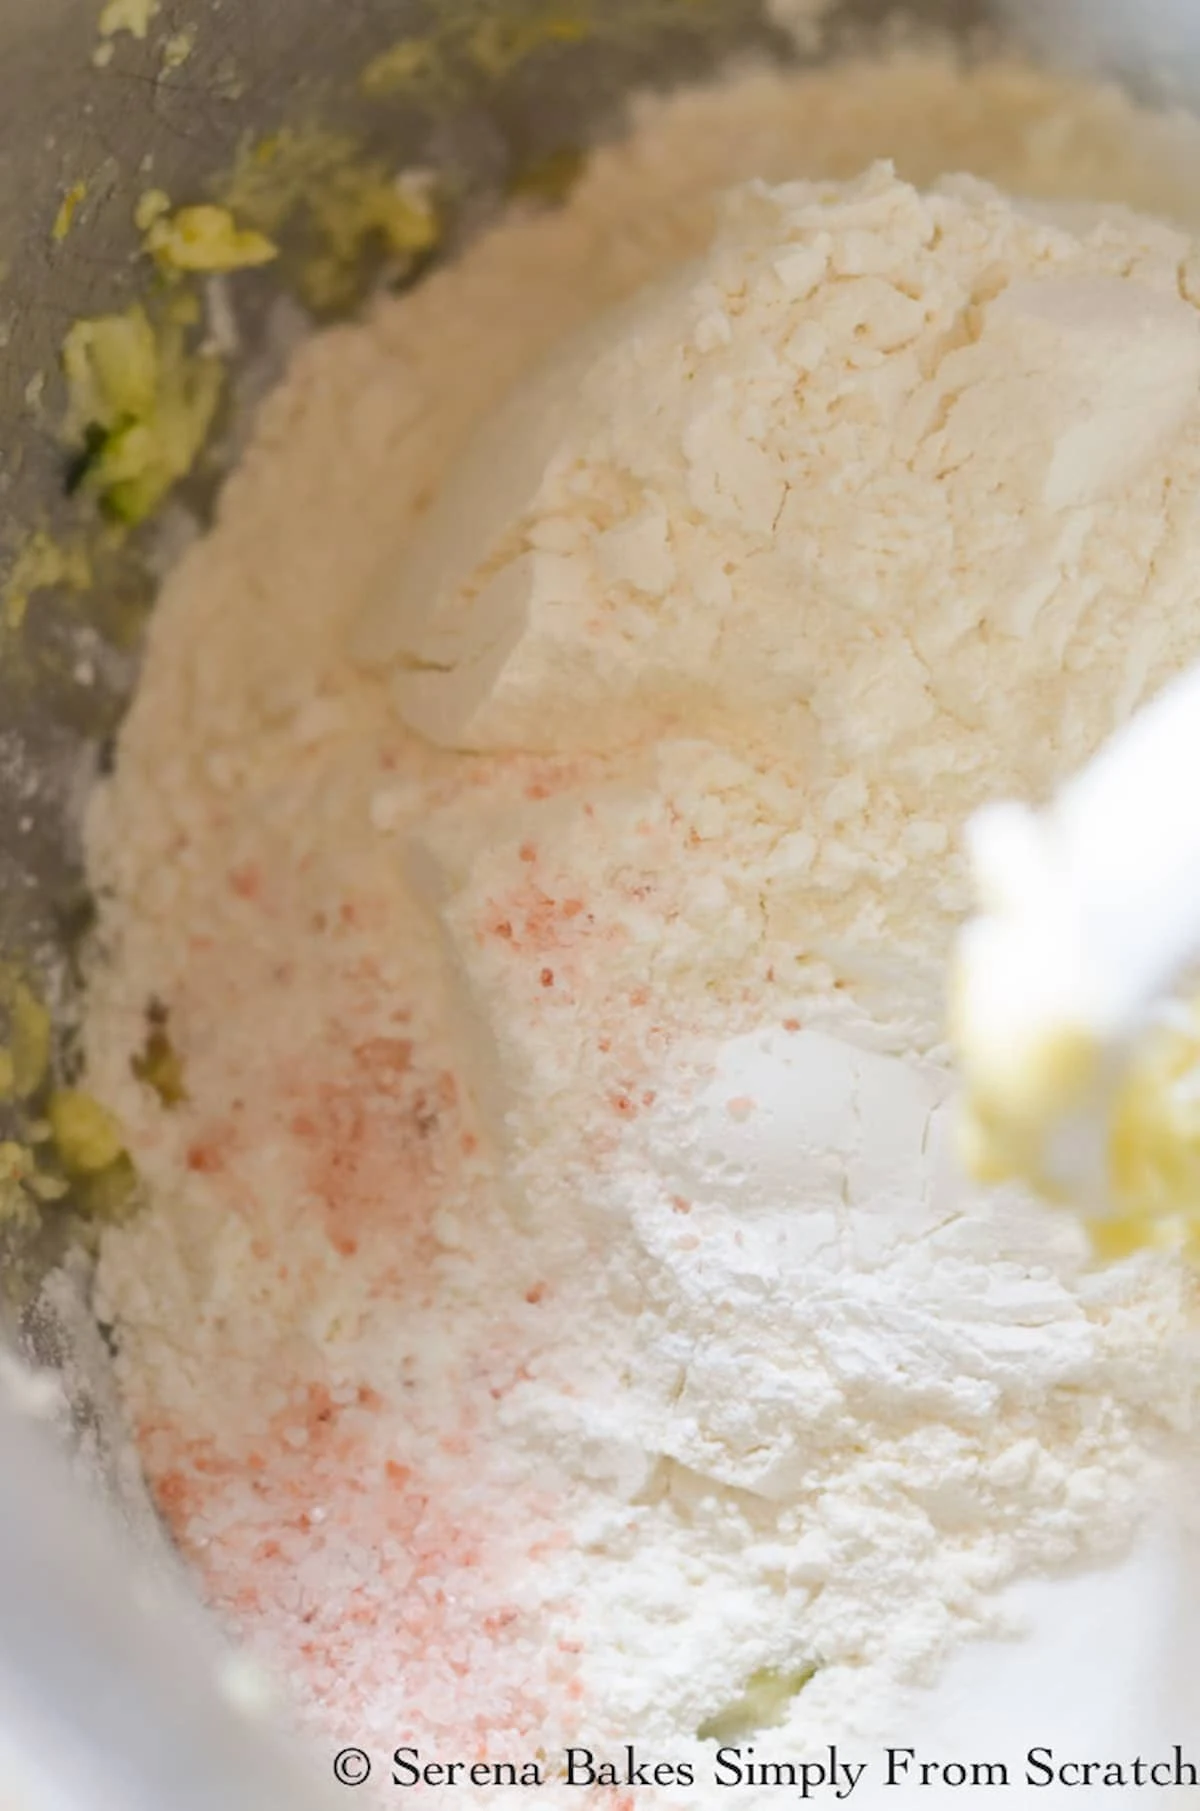 All- Purpose Flour, Salt, Baking Powder, and Baking Soda added to Lemon Zucchini Bread batter.